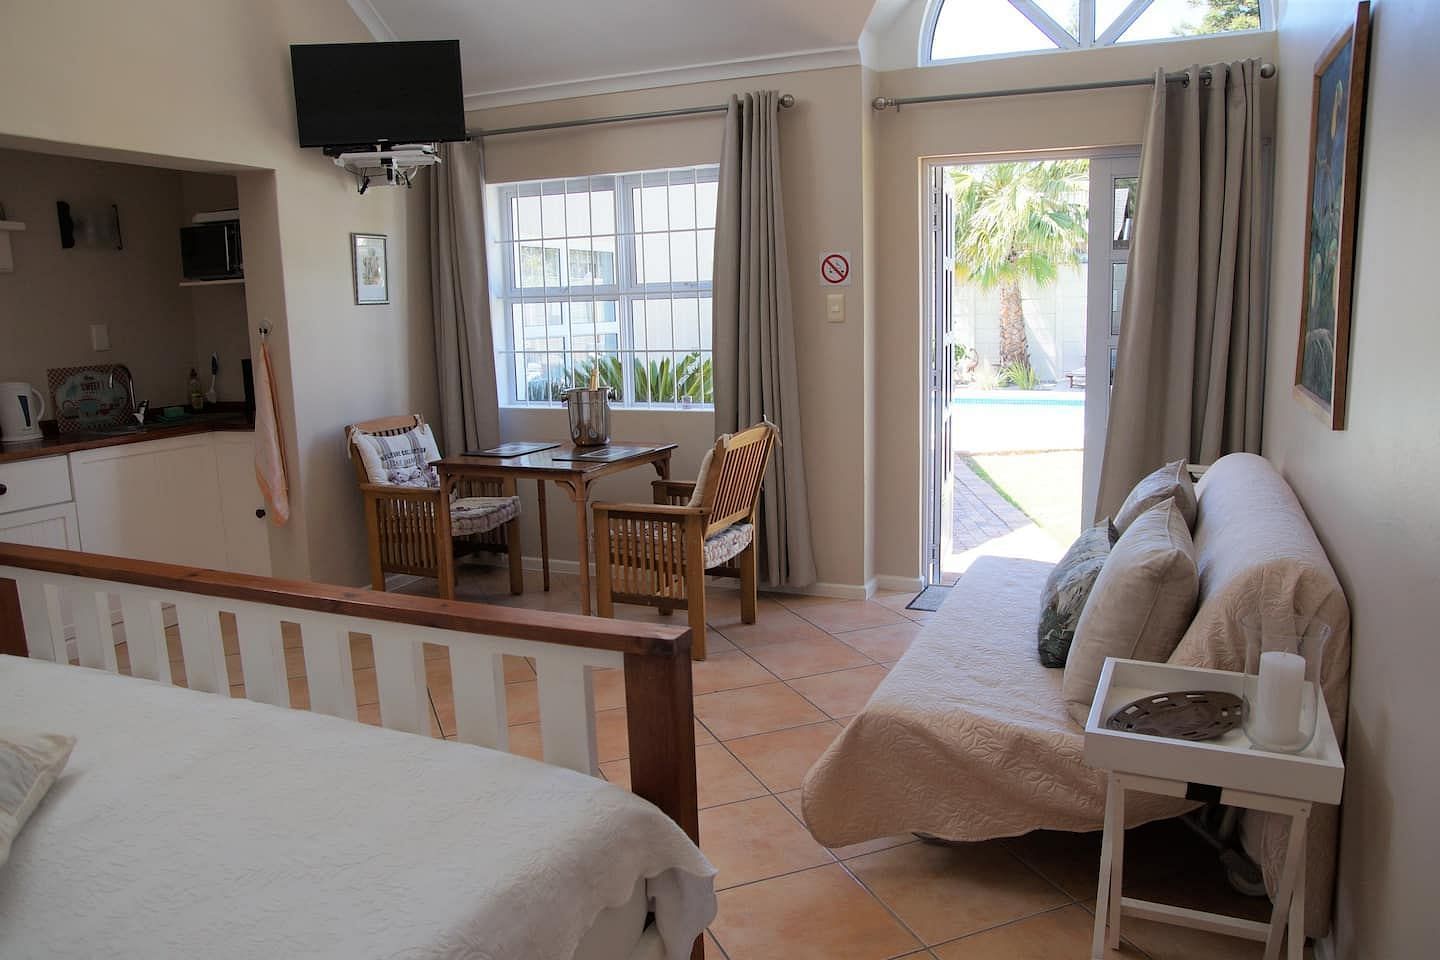 JWguest Residential Home at Cape Town, Western Cape | Wonderful Studio Apartment between 2 Oceans #2 | Jwbnb no brobnb 6